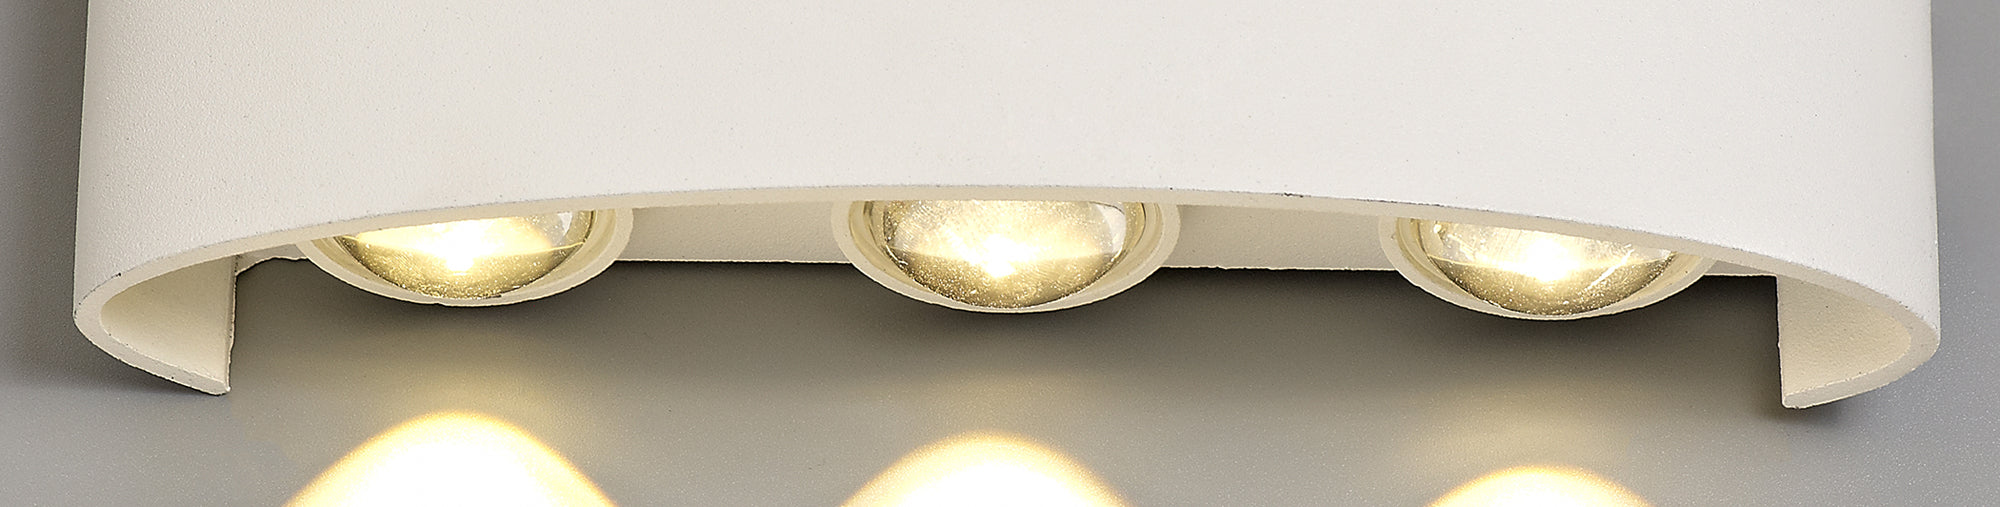 Deco Leoni Up & Downward Lighting Wall Light, 6W LED 3000K, Sand White, 500lm, IP54, 3yrs Warranty • D0450